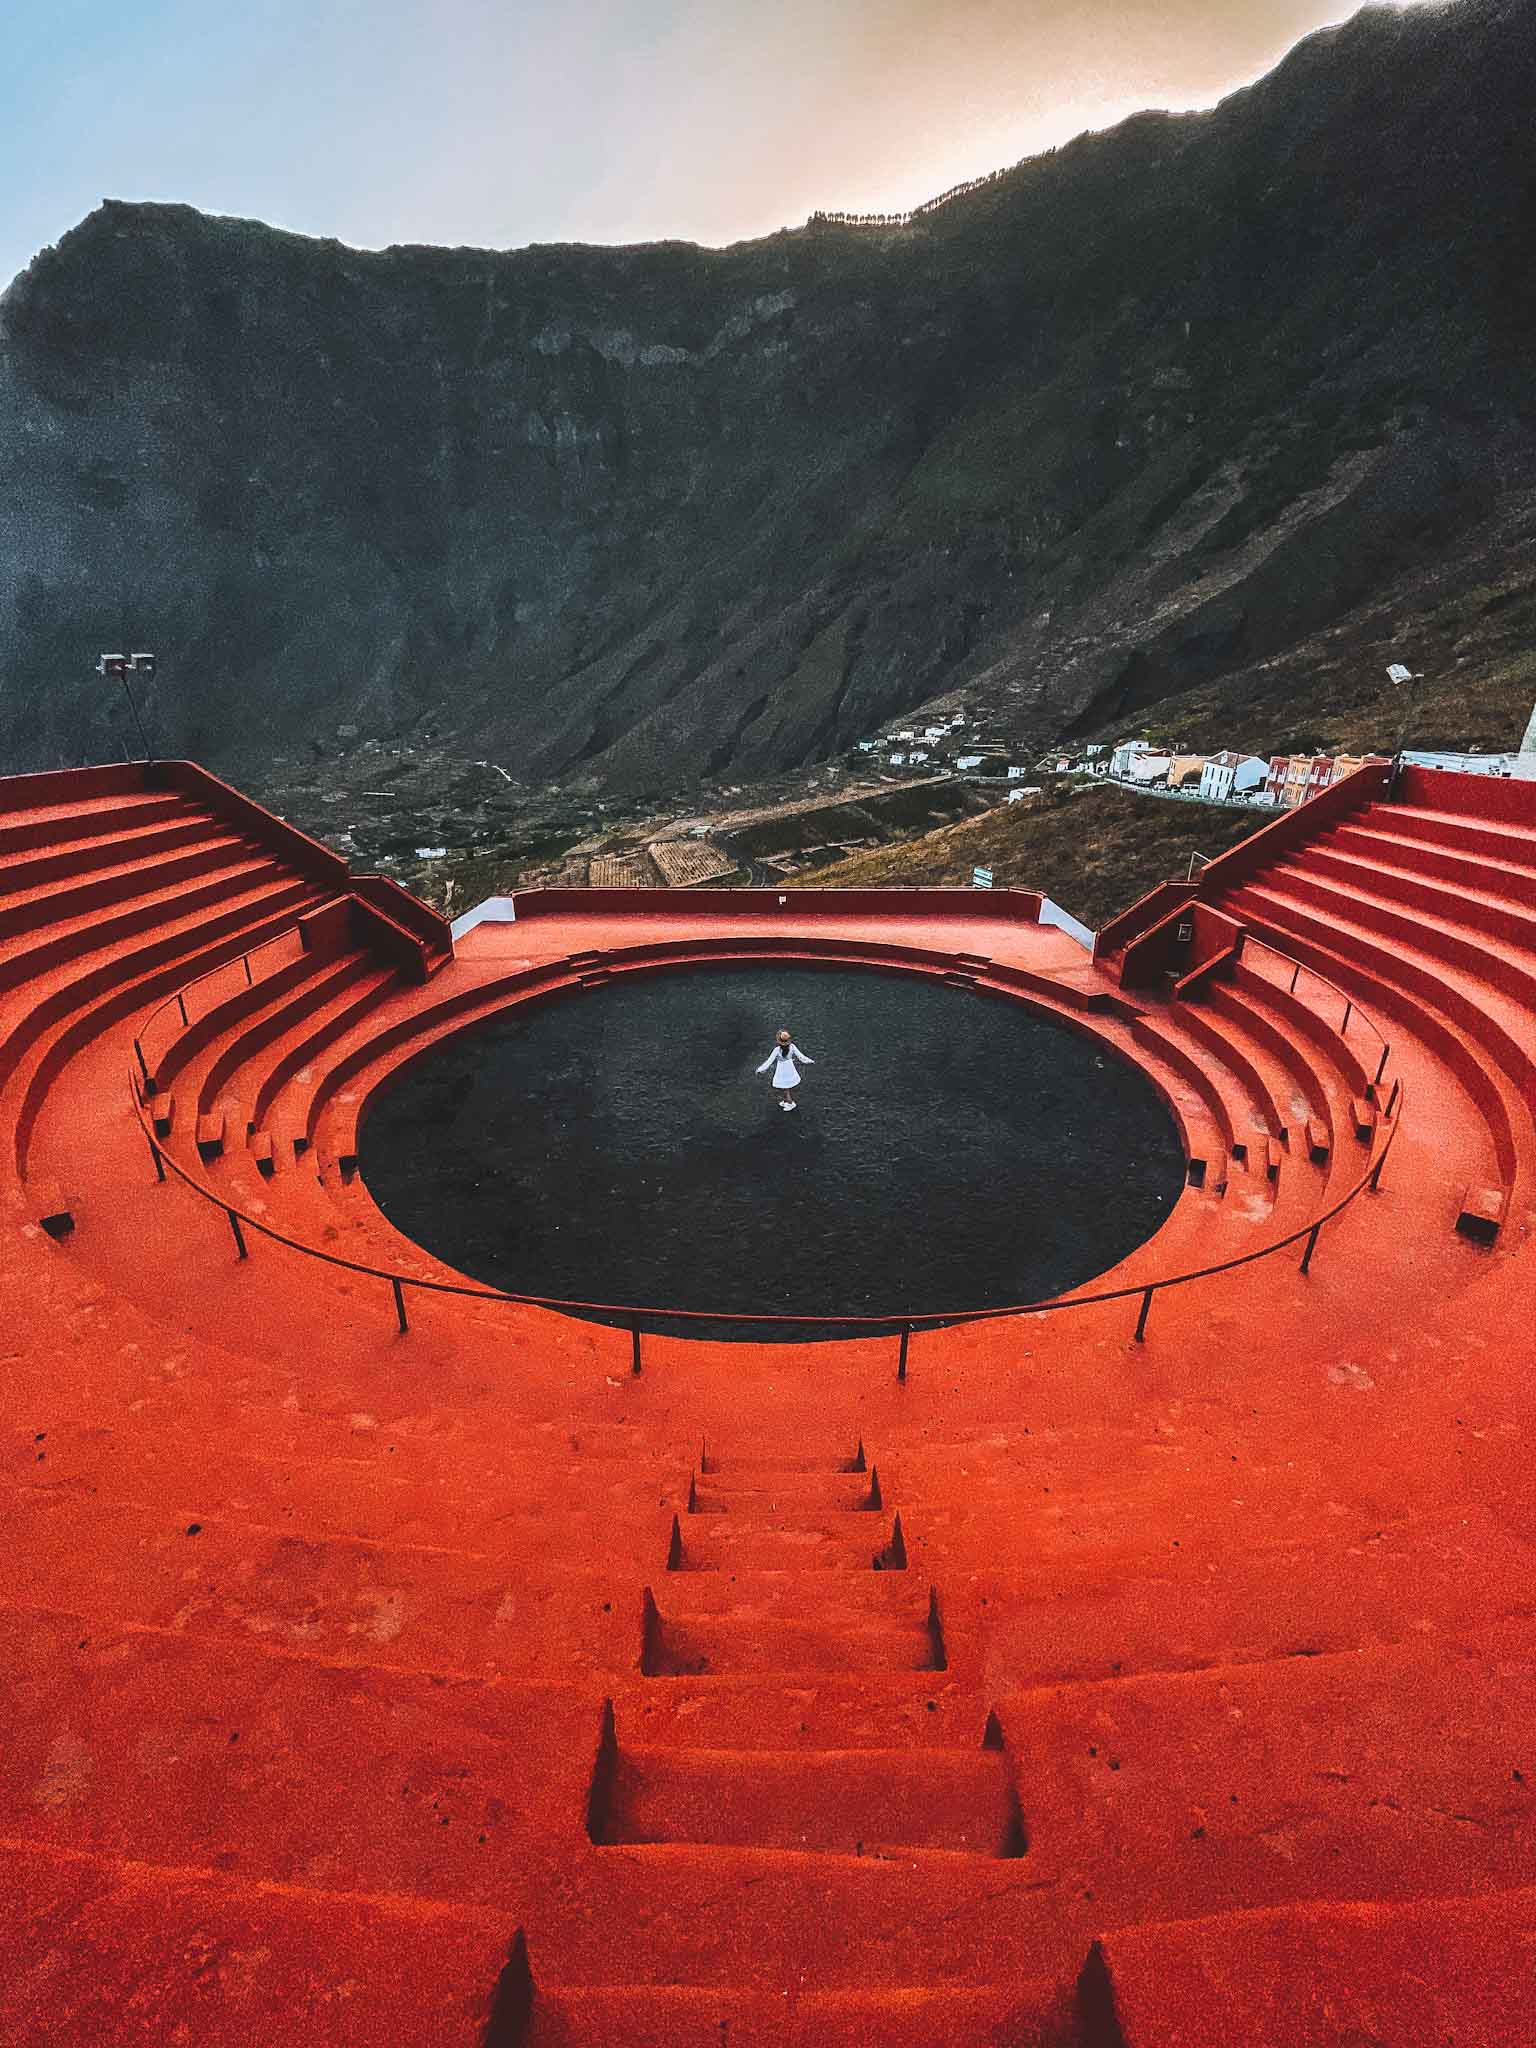 Best Instagram spots in El Hierro Canary Islands - Red-colored Campo de Lucha